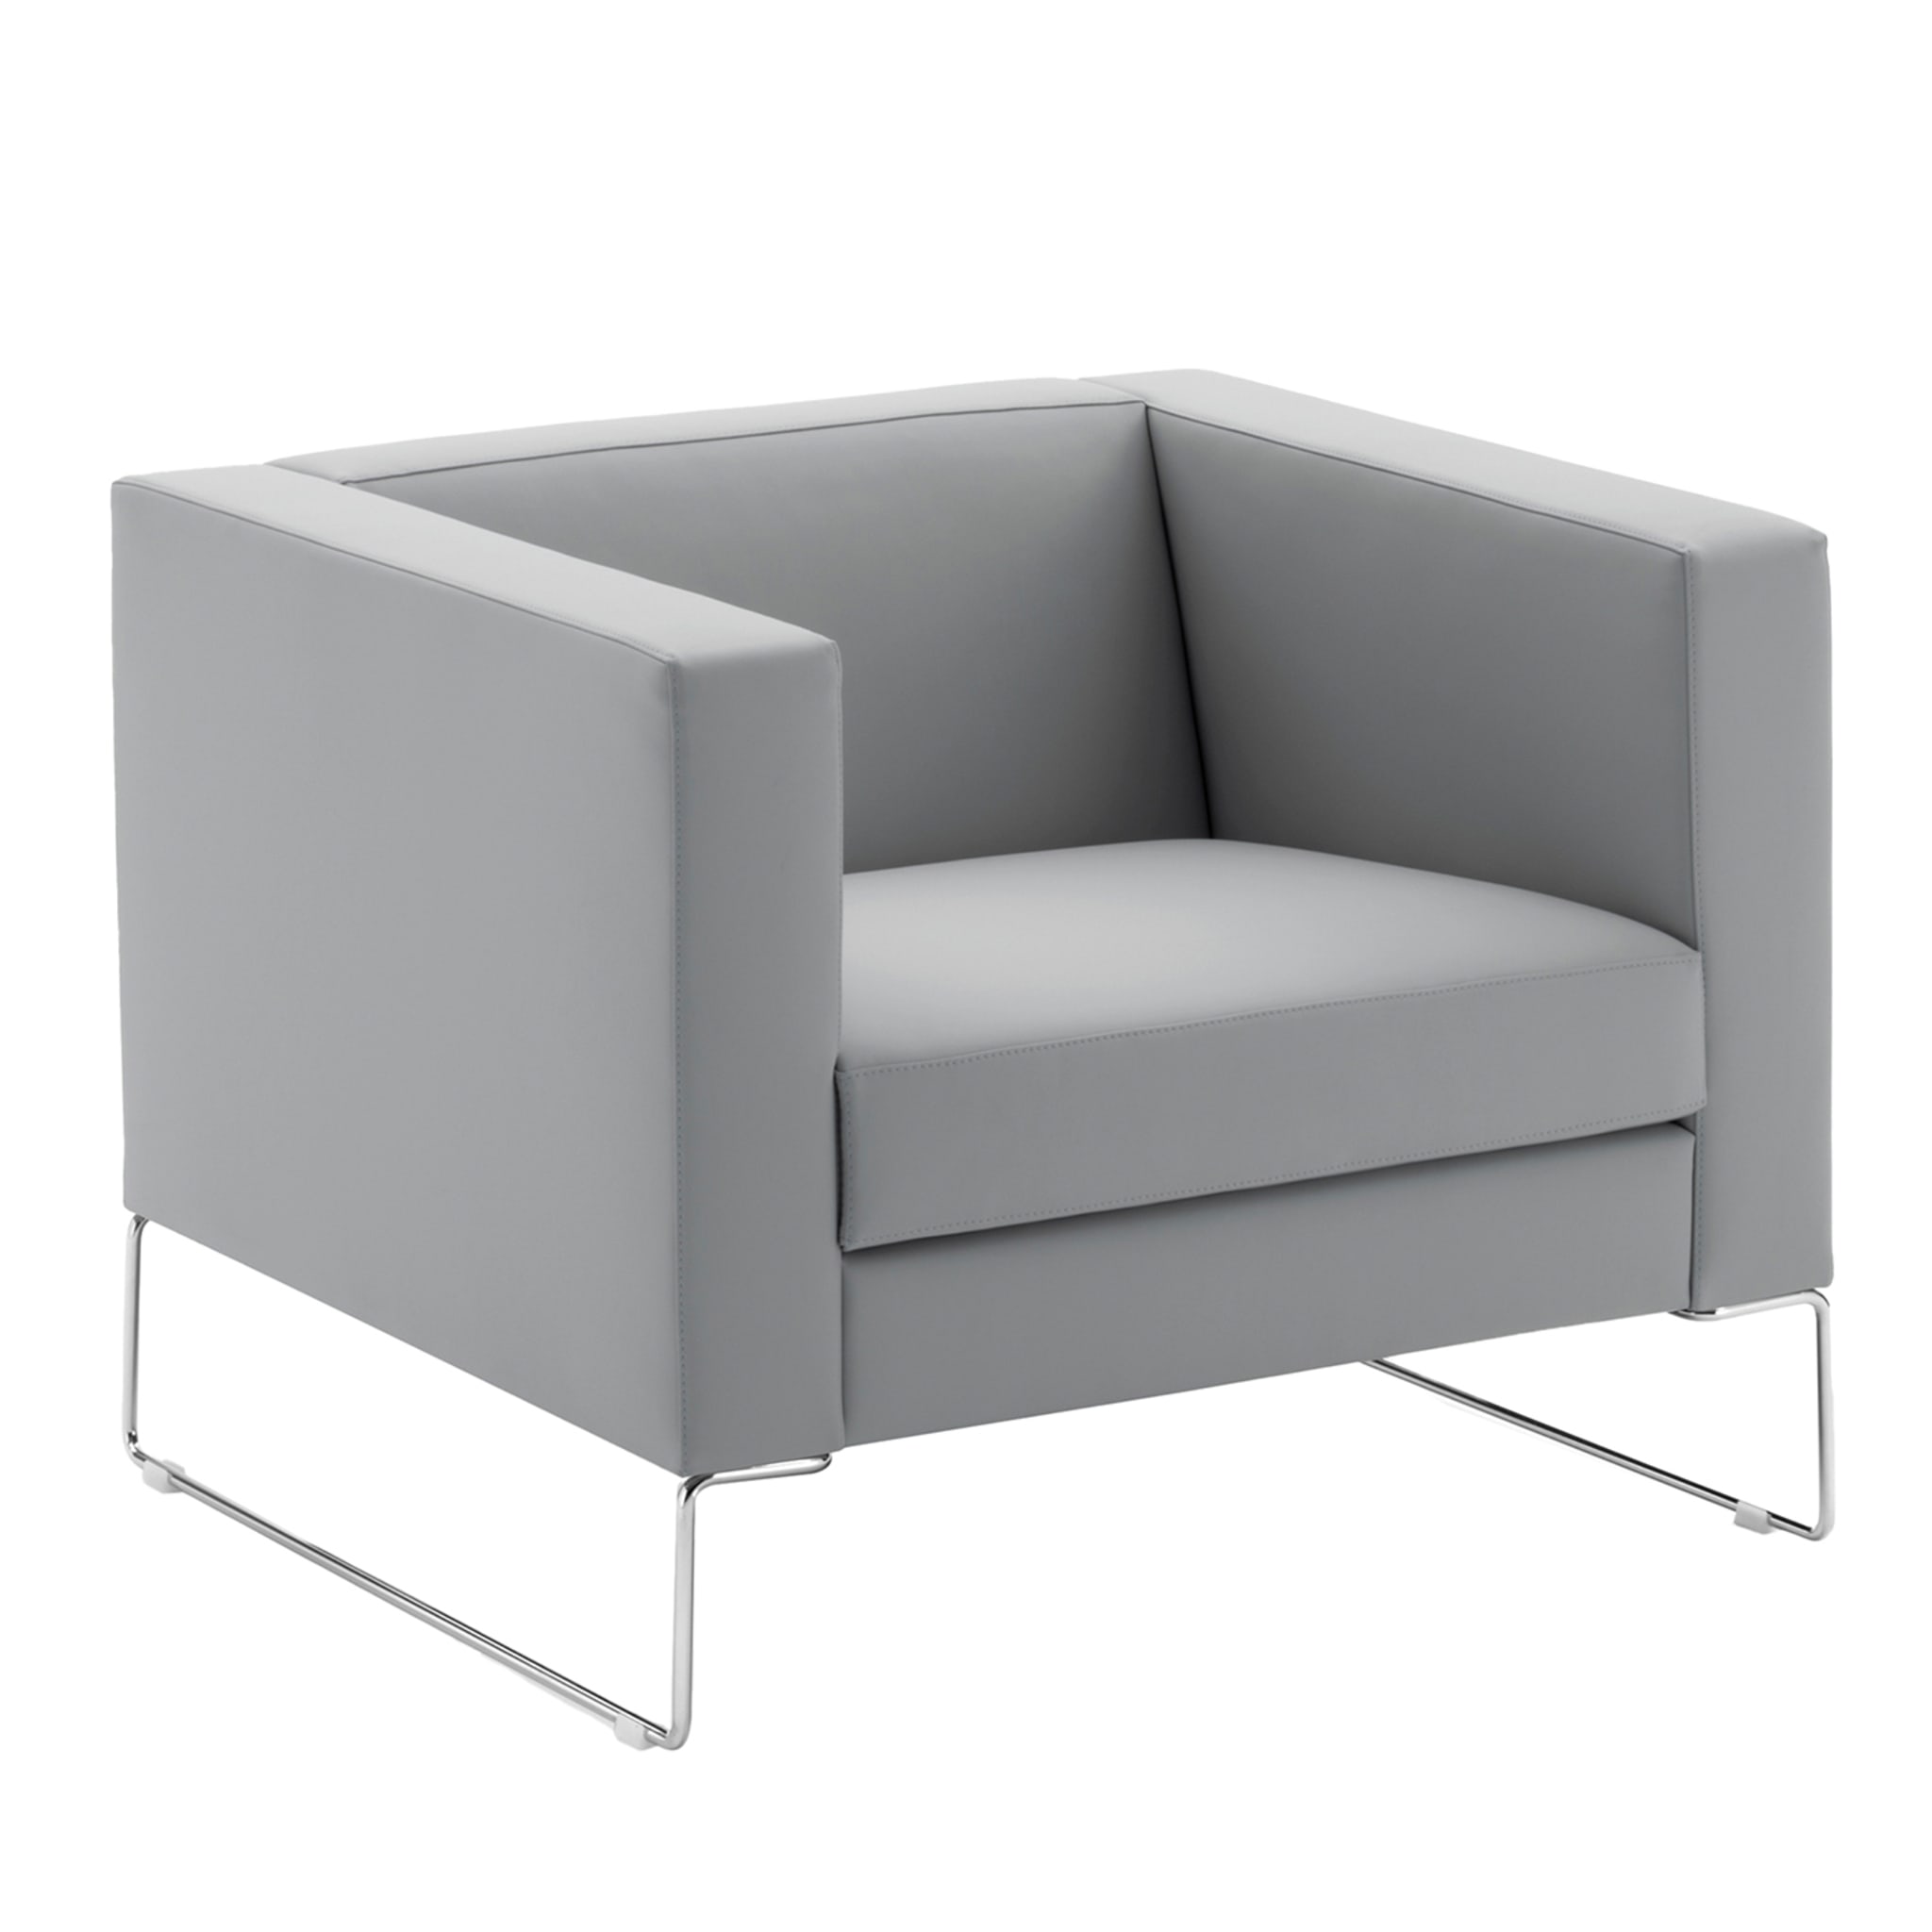 CUBIKO gray armchair - Main view